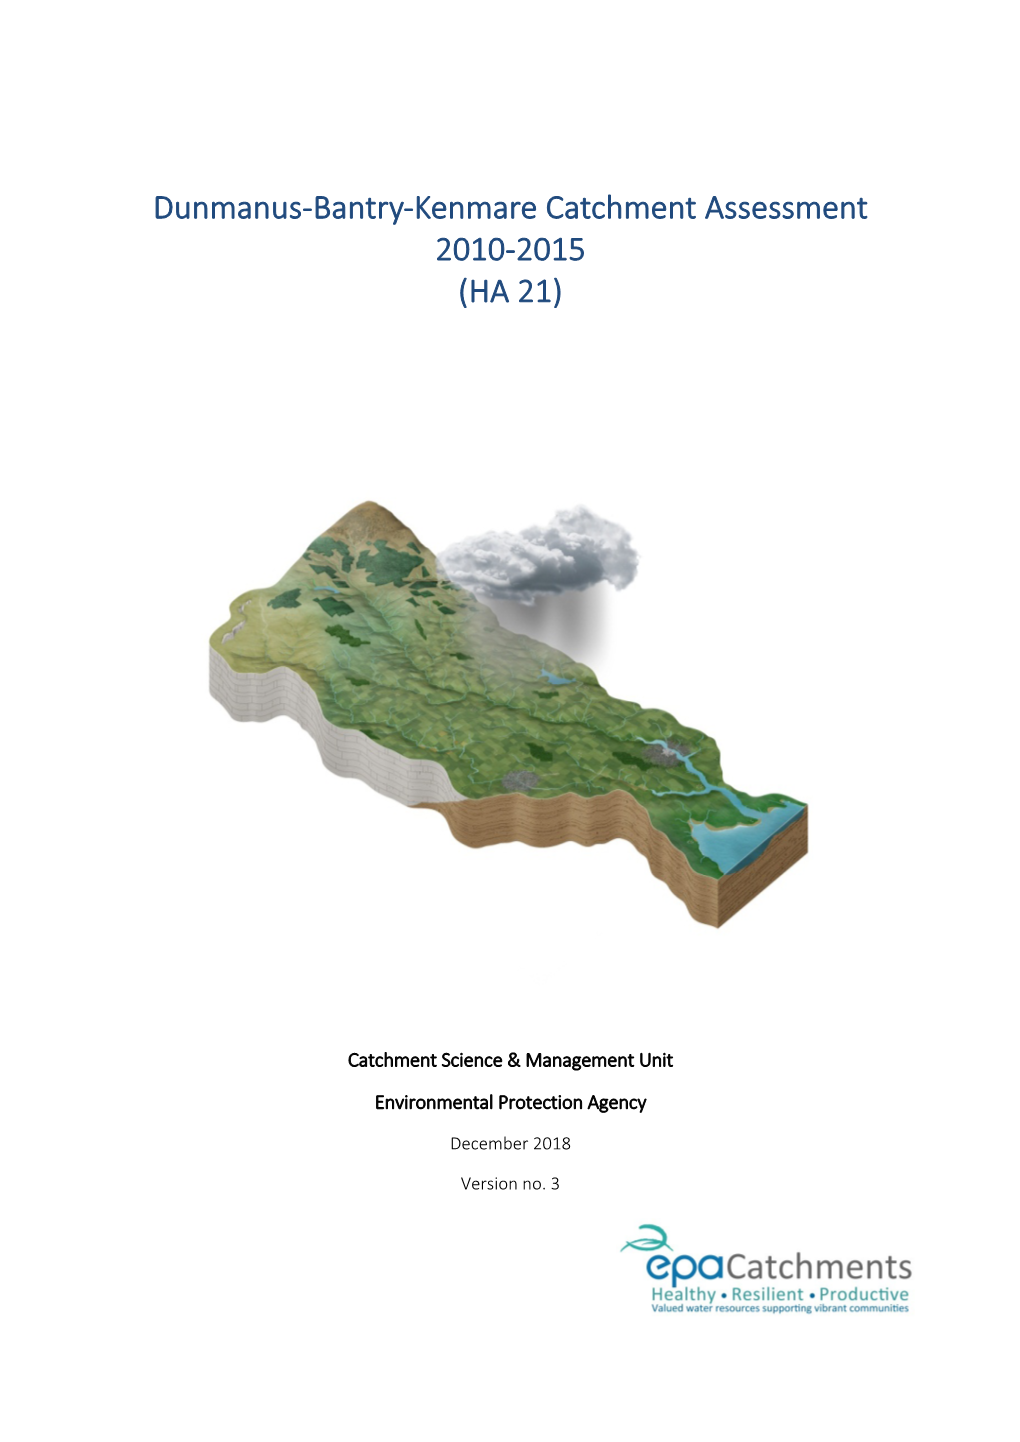 Dunmanus-Bantry-Kenmare Catchment Assessment 2010-2015 (HA 21)